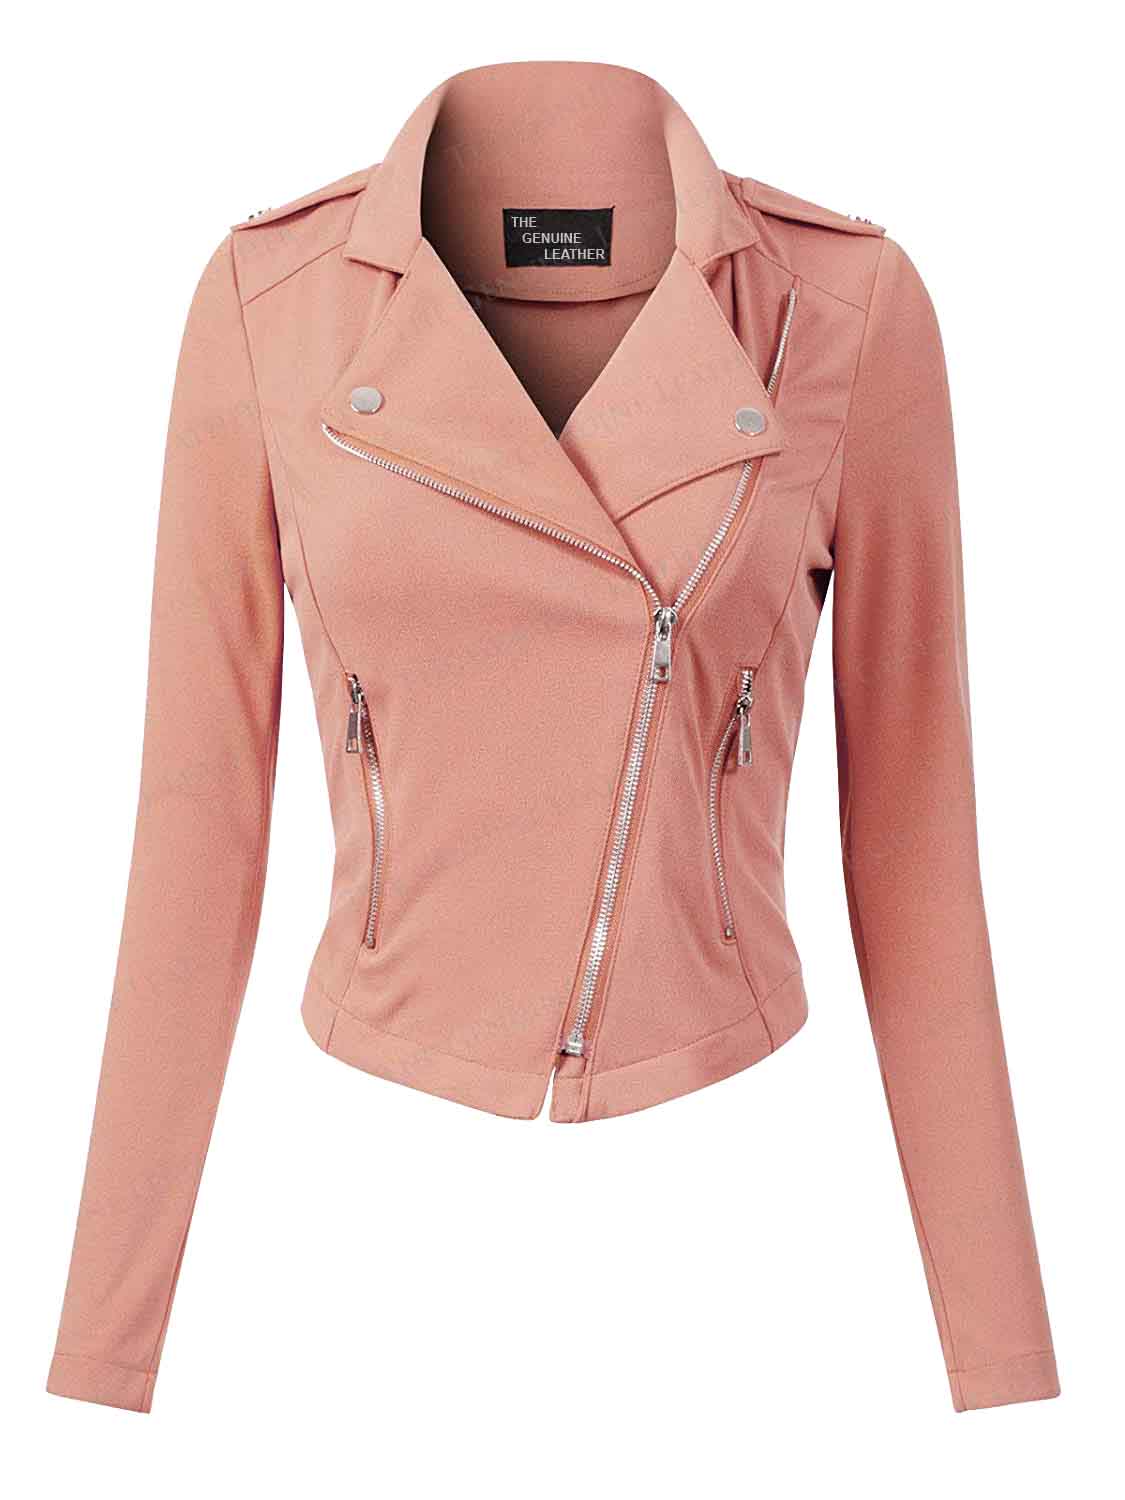 Stylish Womens Pink Leather Jacket